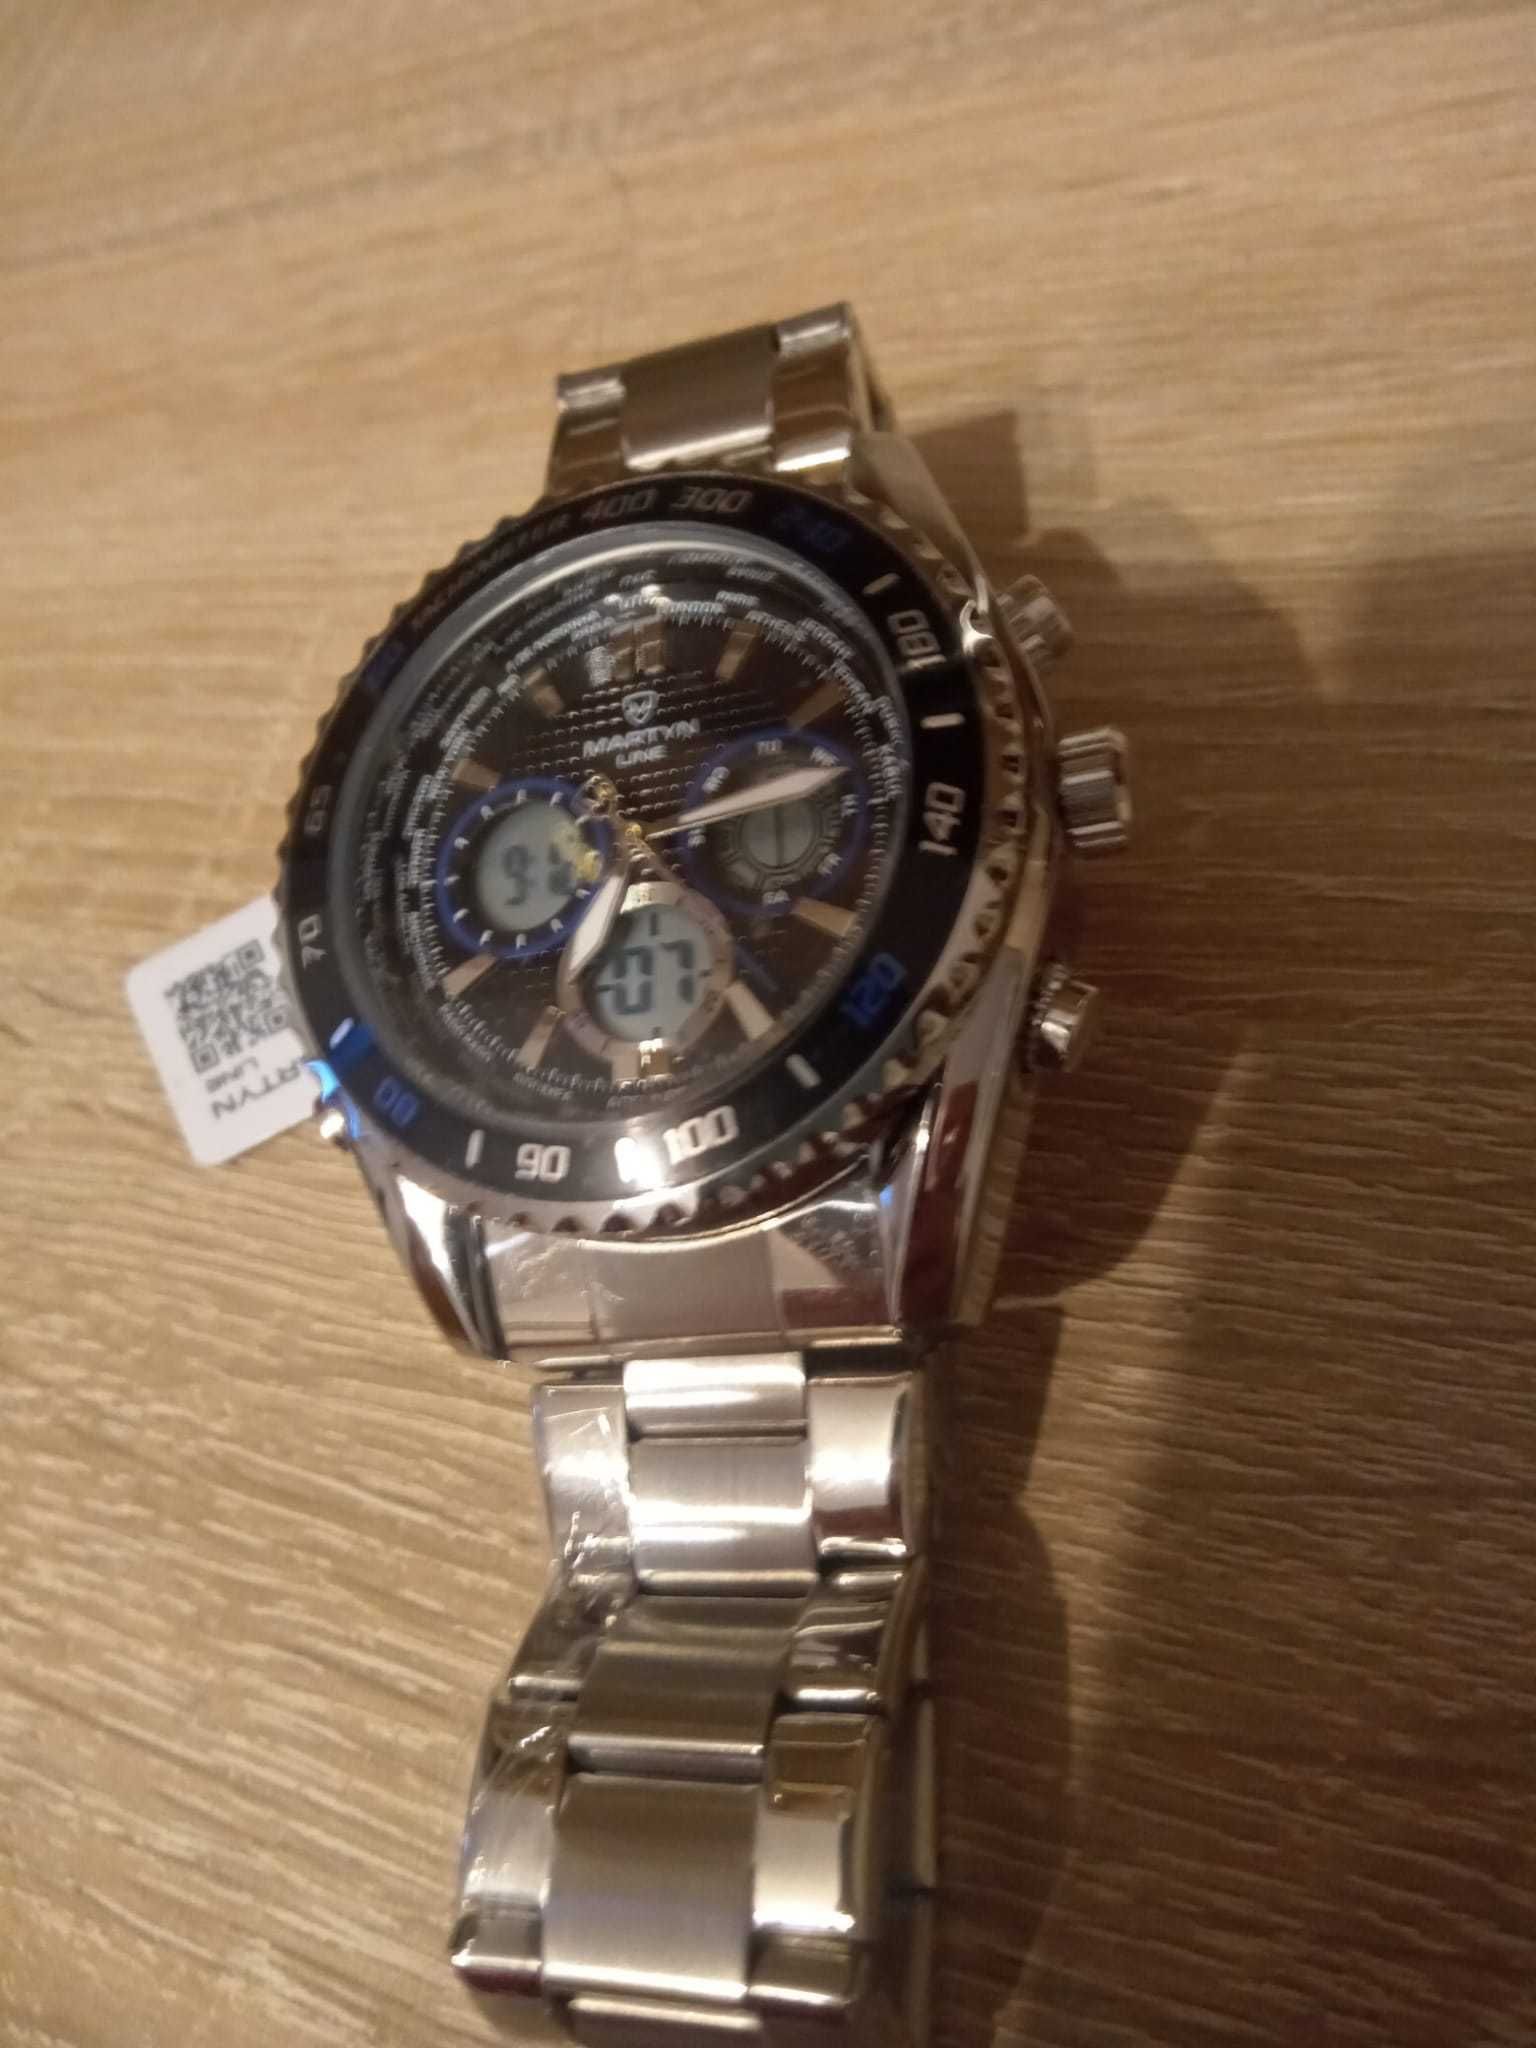 CEAS Martyn Line Watch dual time chronograph